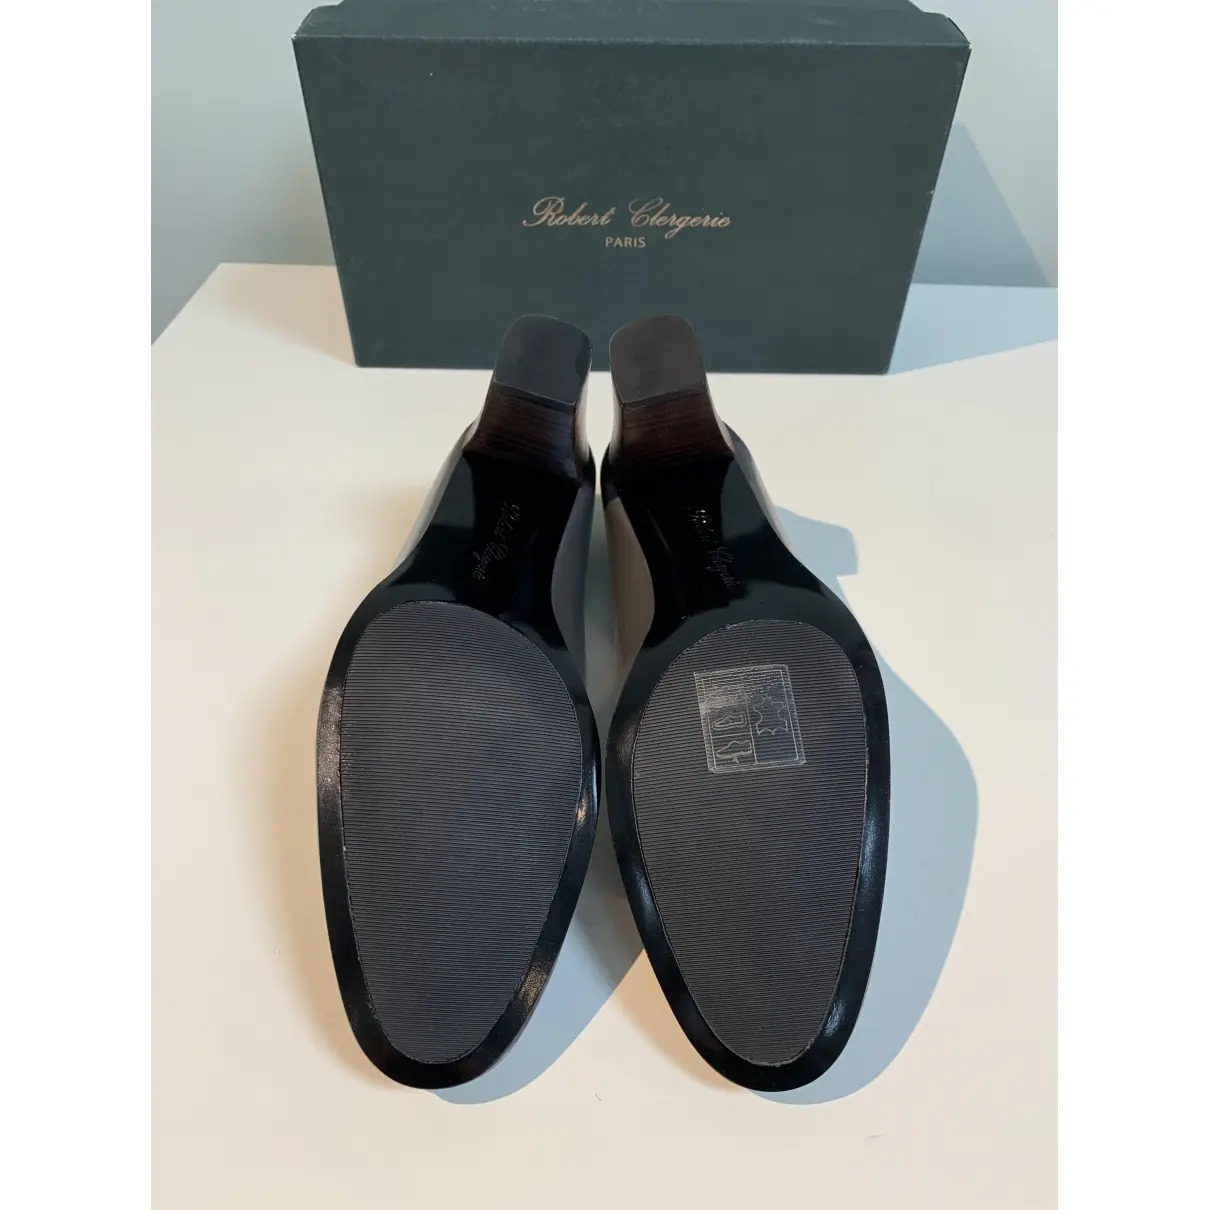 Leather heels Robert Clergerie